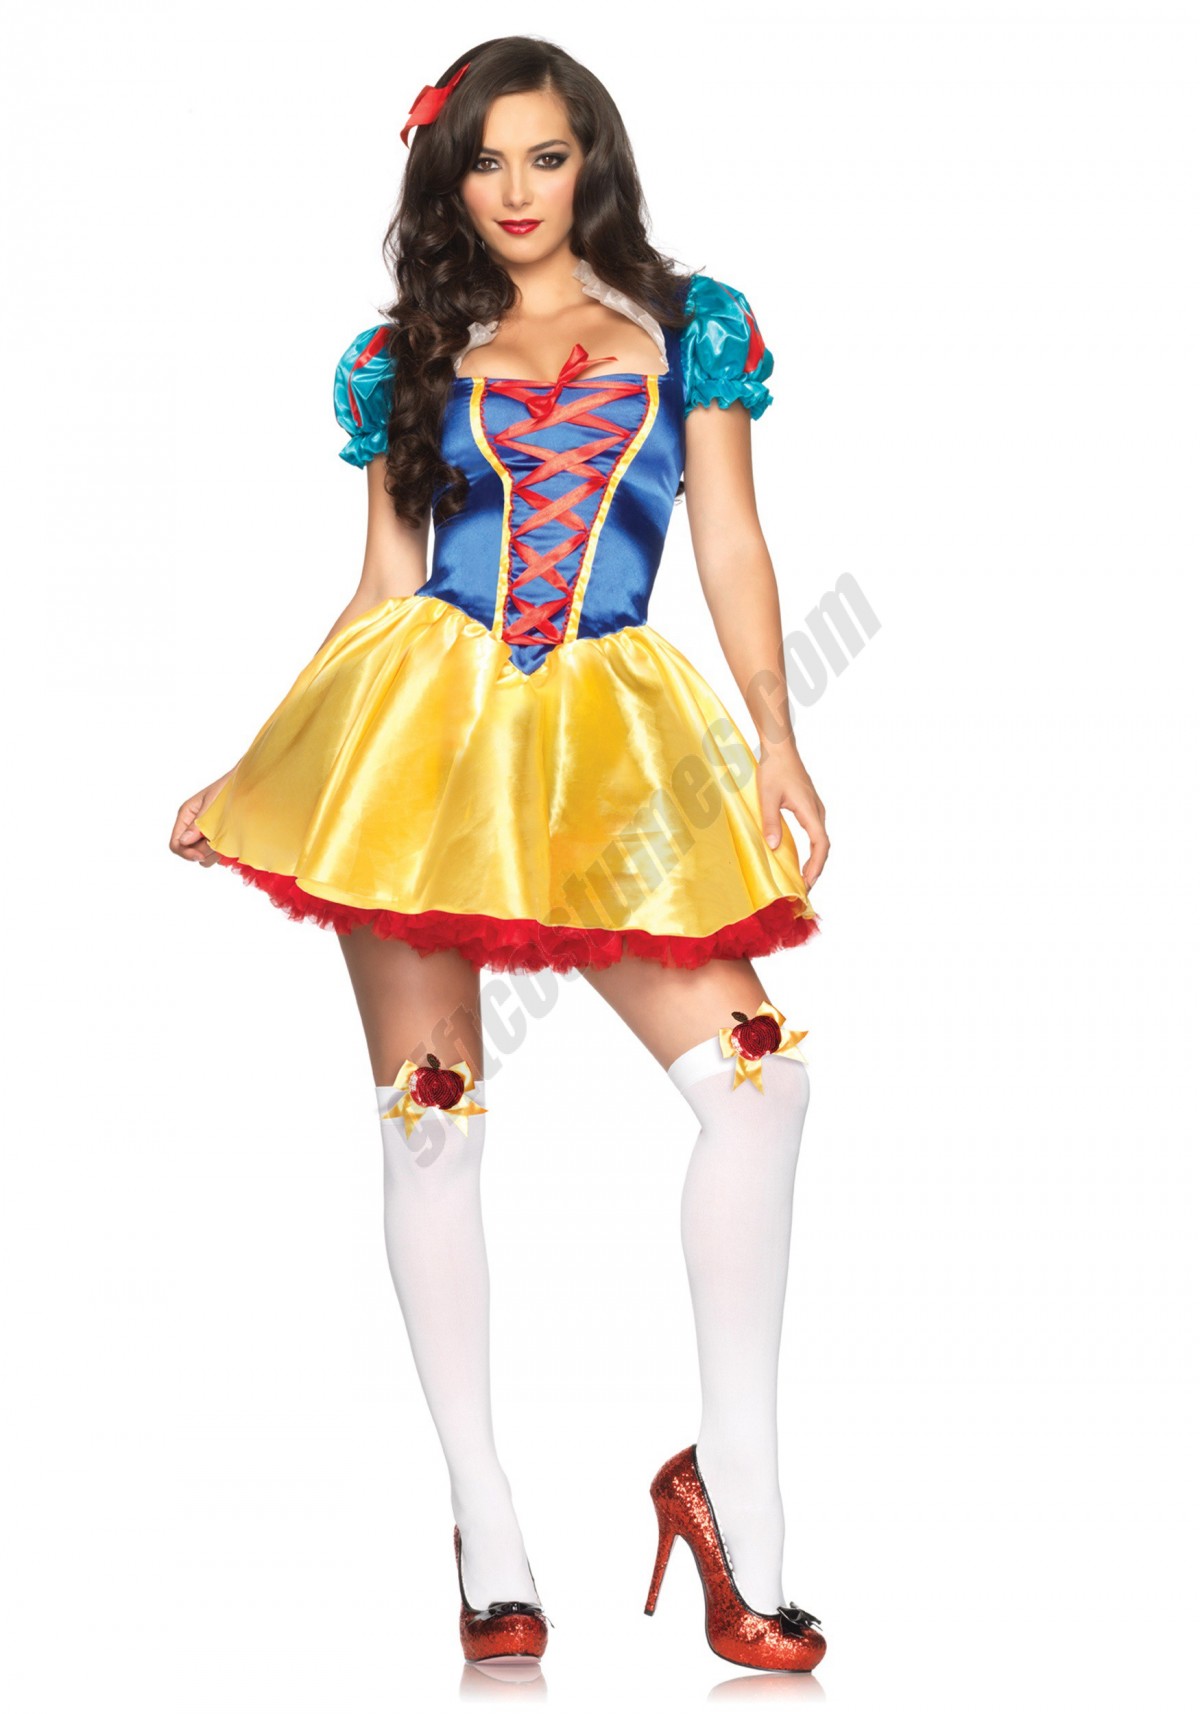 Fairytale Snow White Costume - Women's - -0